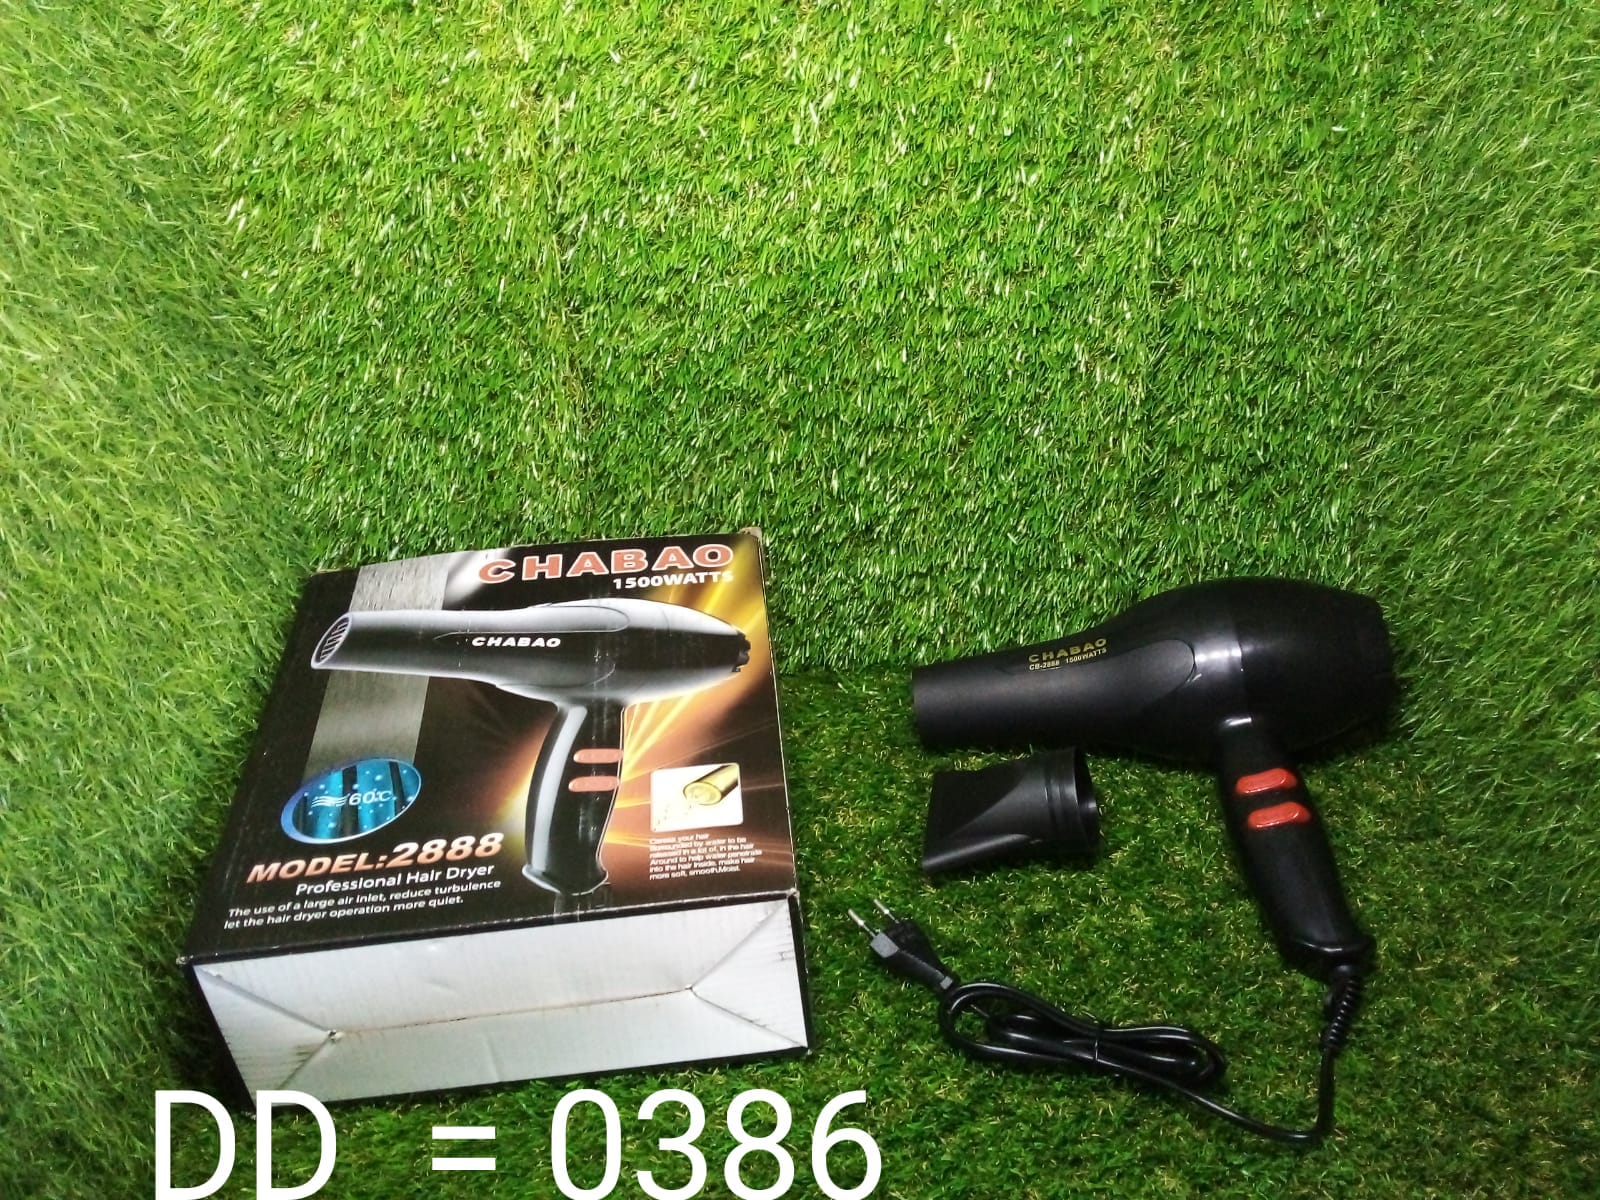 1500 Watts Professional Hair Dryer 2888 (Black)